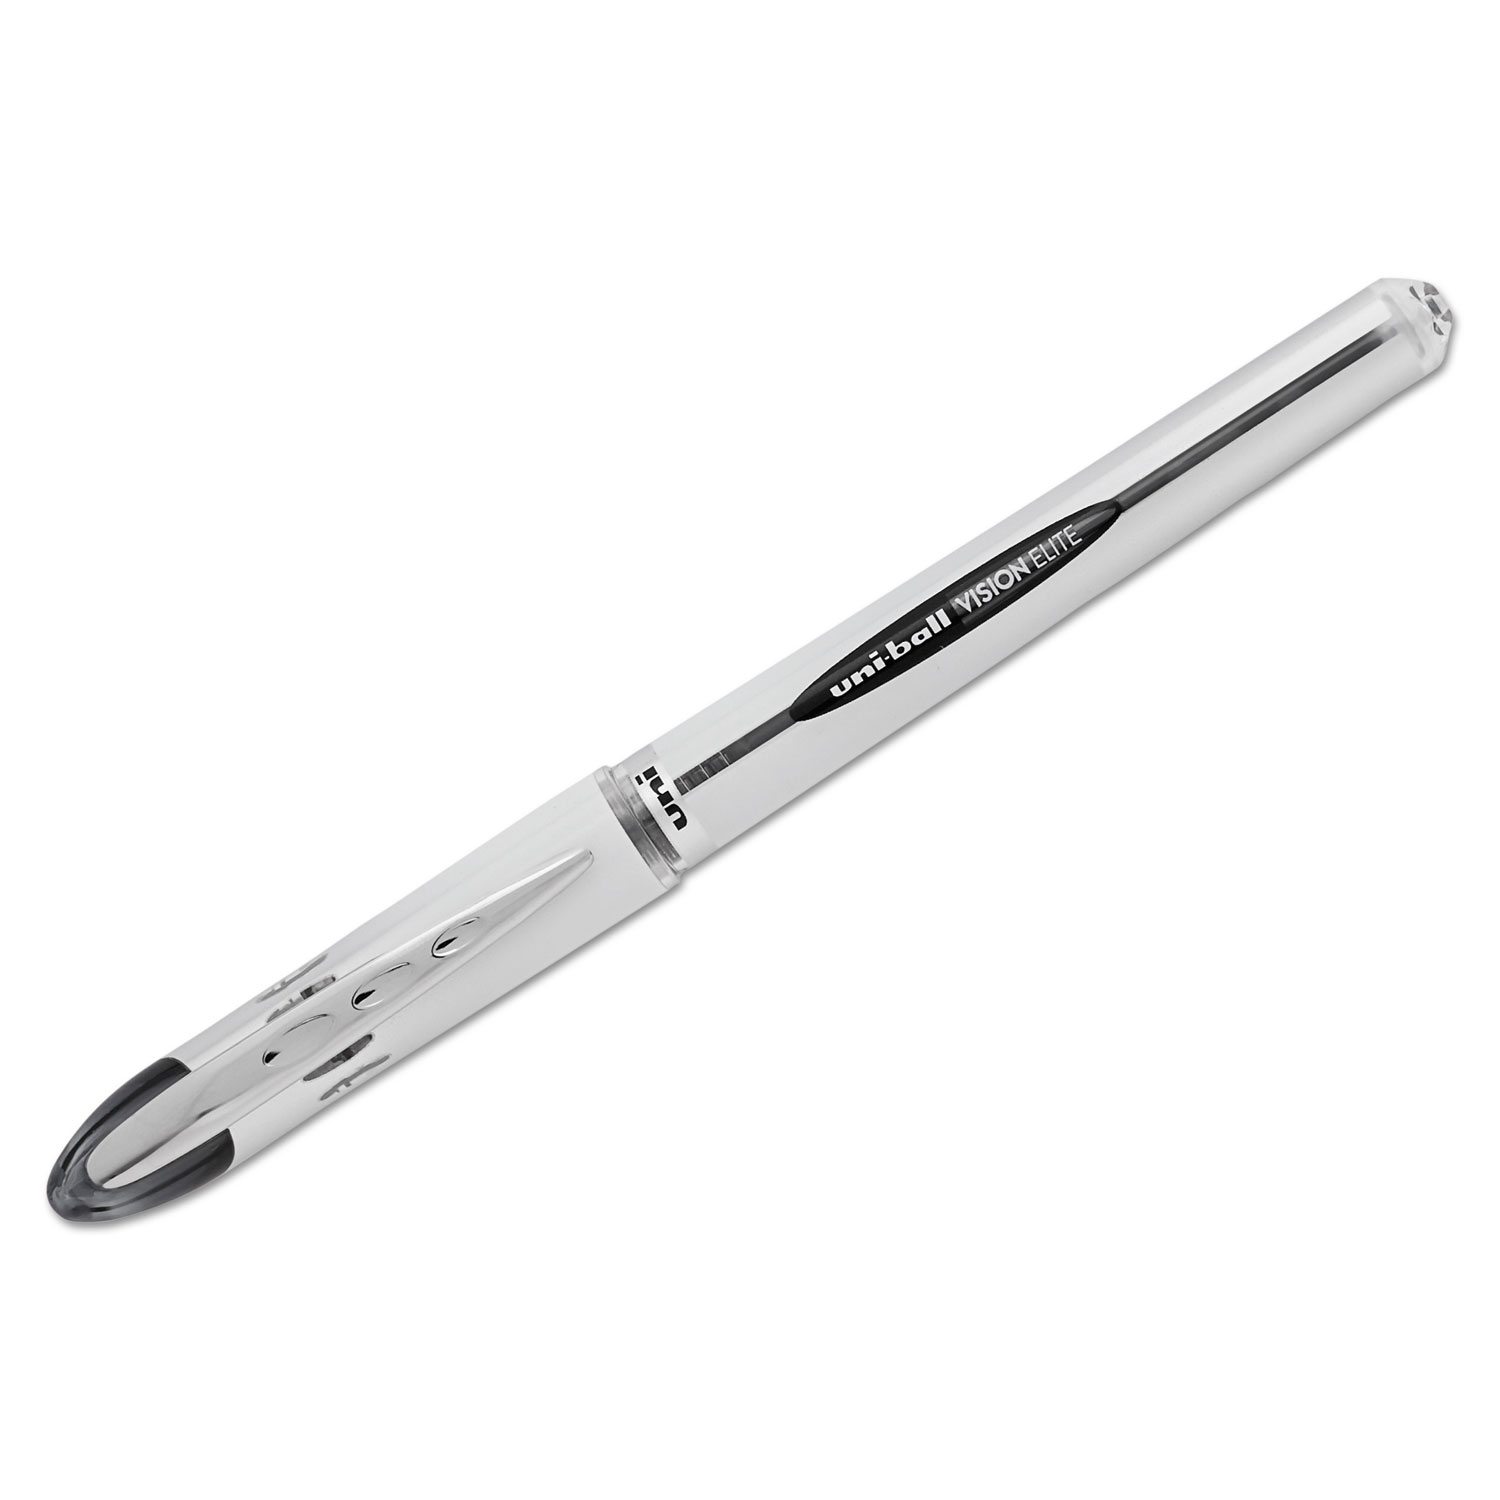  uni-ball 61231 VISION ELITE Stick Roller Ball Pen, Bold 0.8mm, Black Ink, White/Black Barrel (UBC61231) 